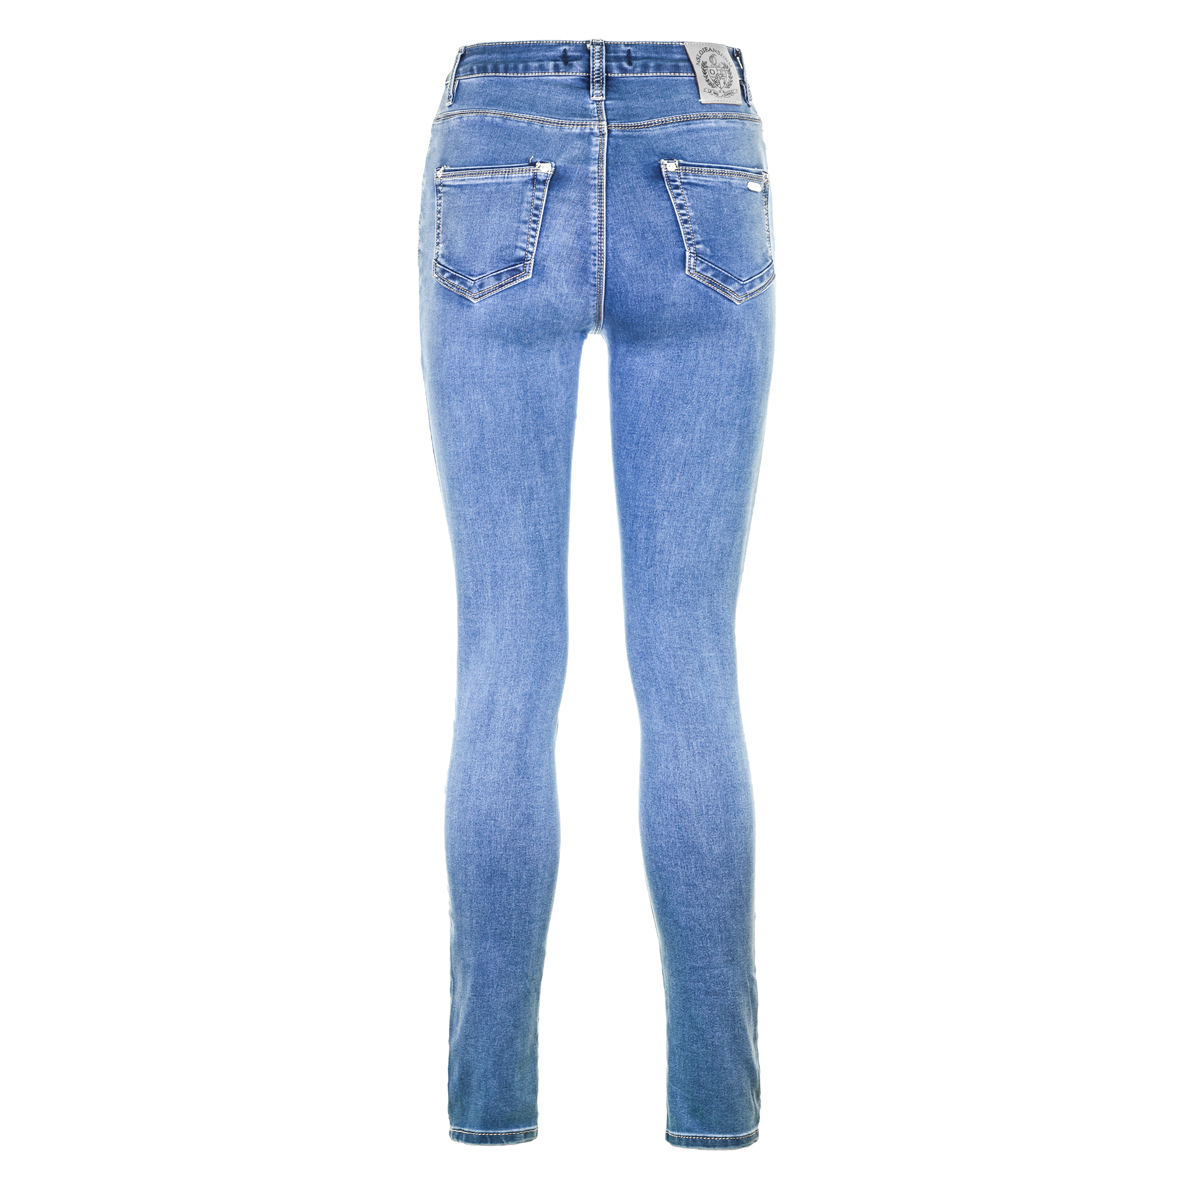 Жен. джинсы арт. 12-0086 Голубой р. 26 Китай, размер 26 - фото 3